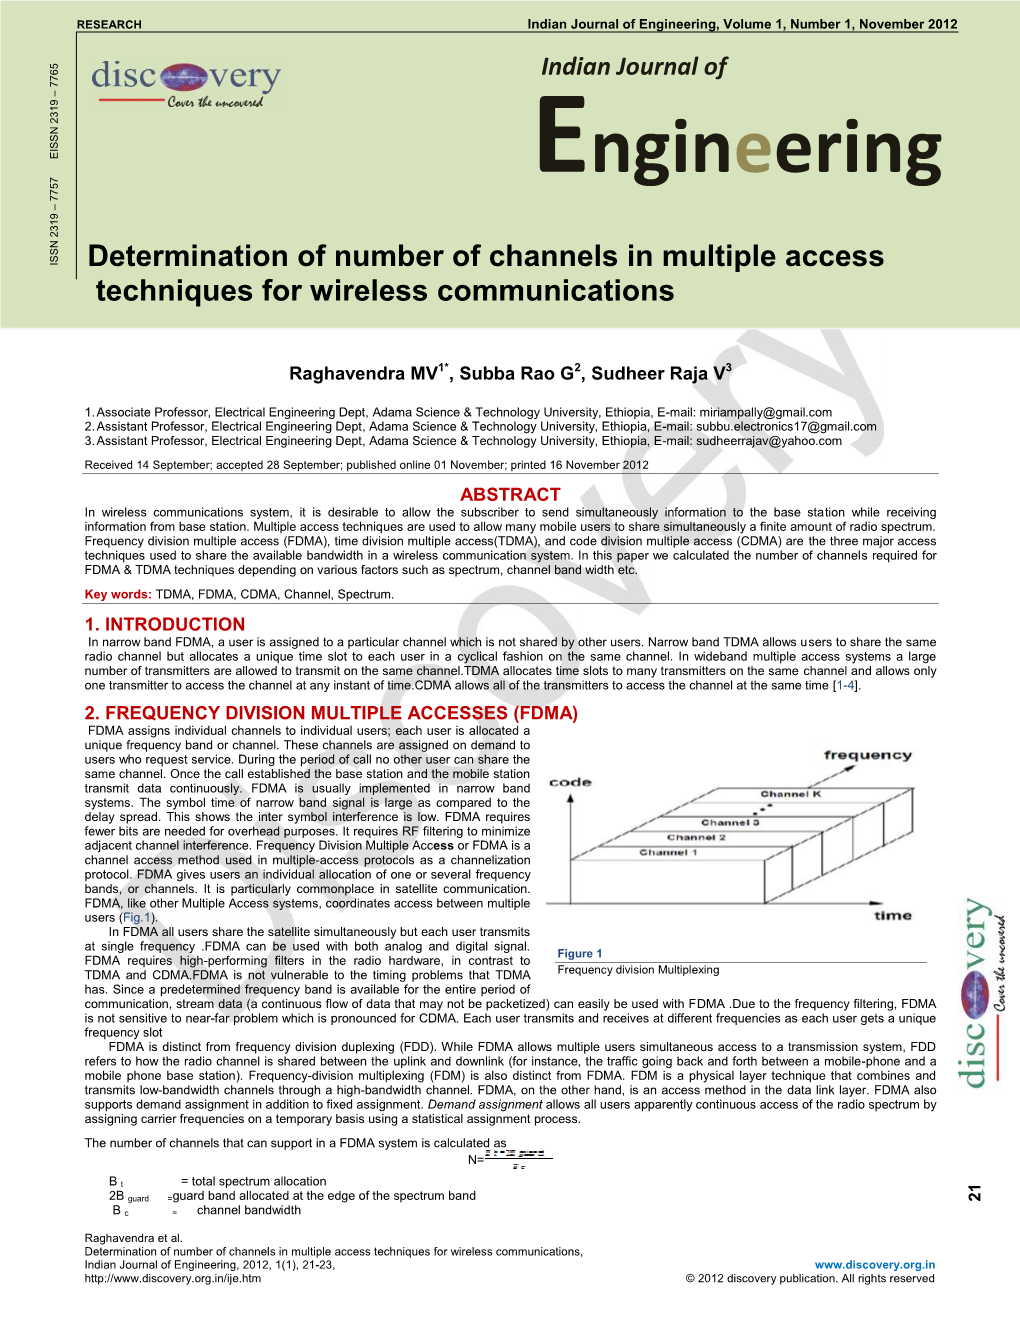 Engineering, Volume 1, Number 1, November 2012 RESEARCH 5 6